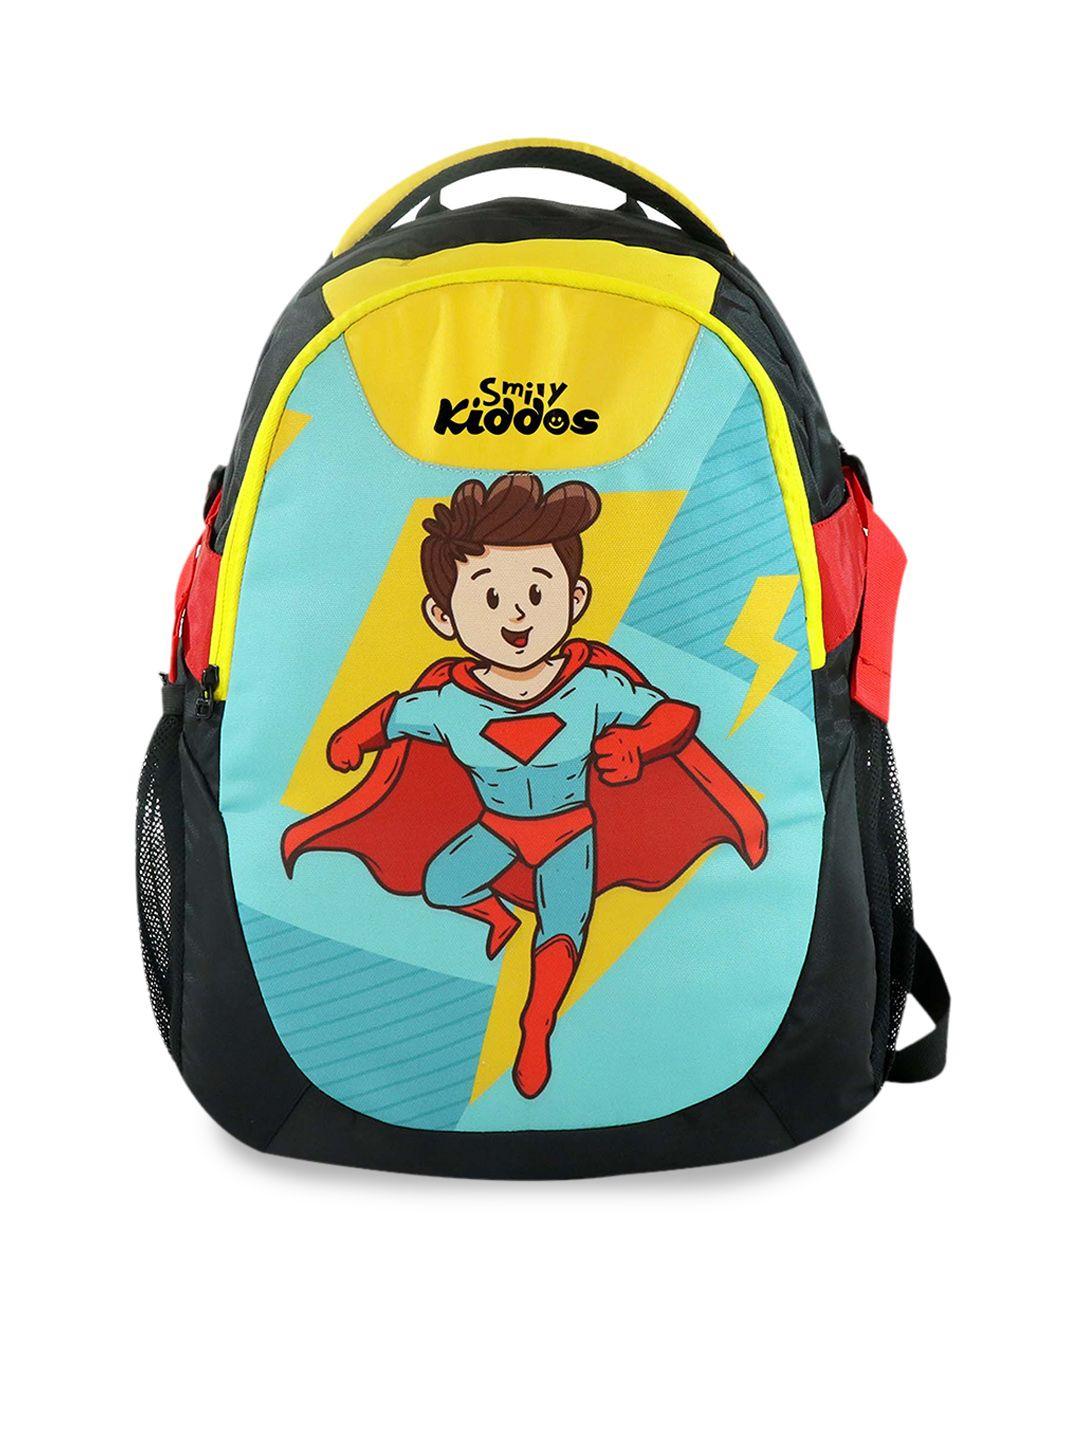 smily kiddos unisex kids yellow backpacks